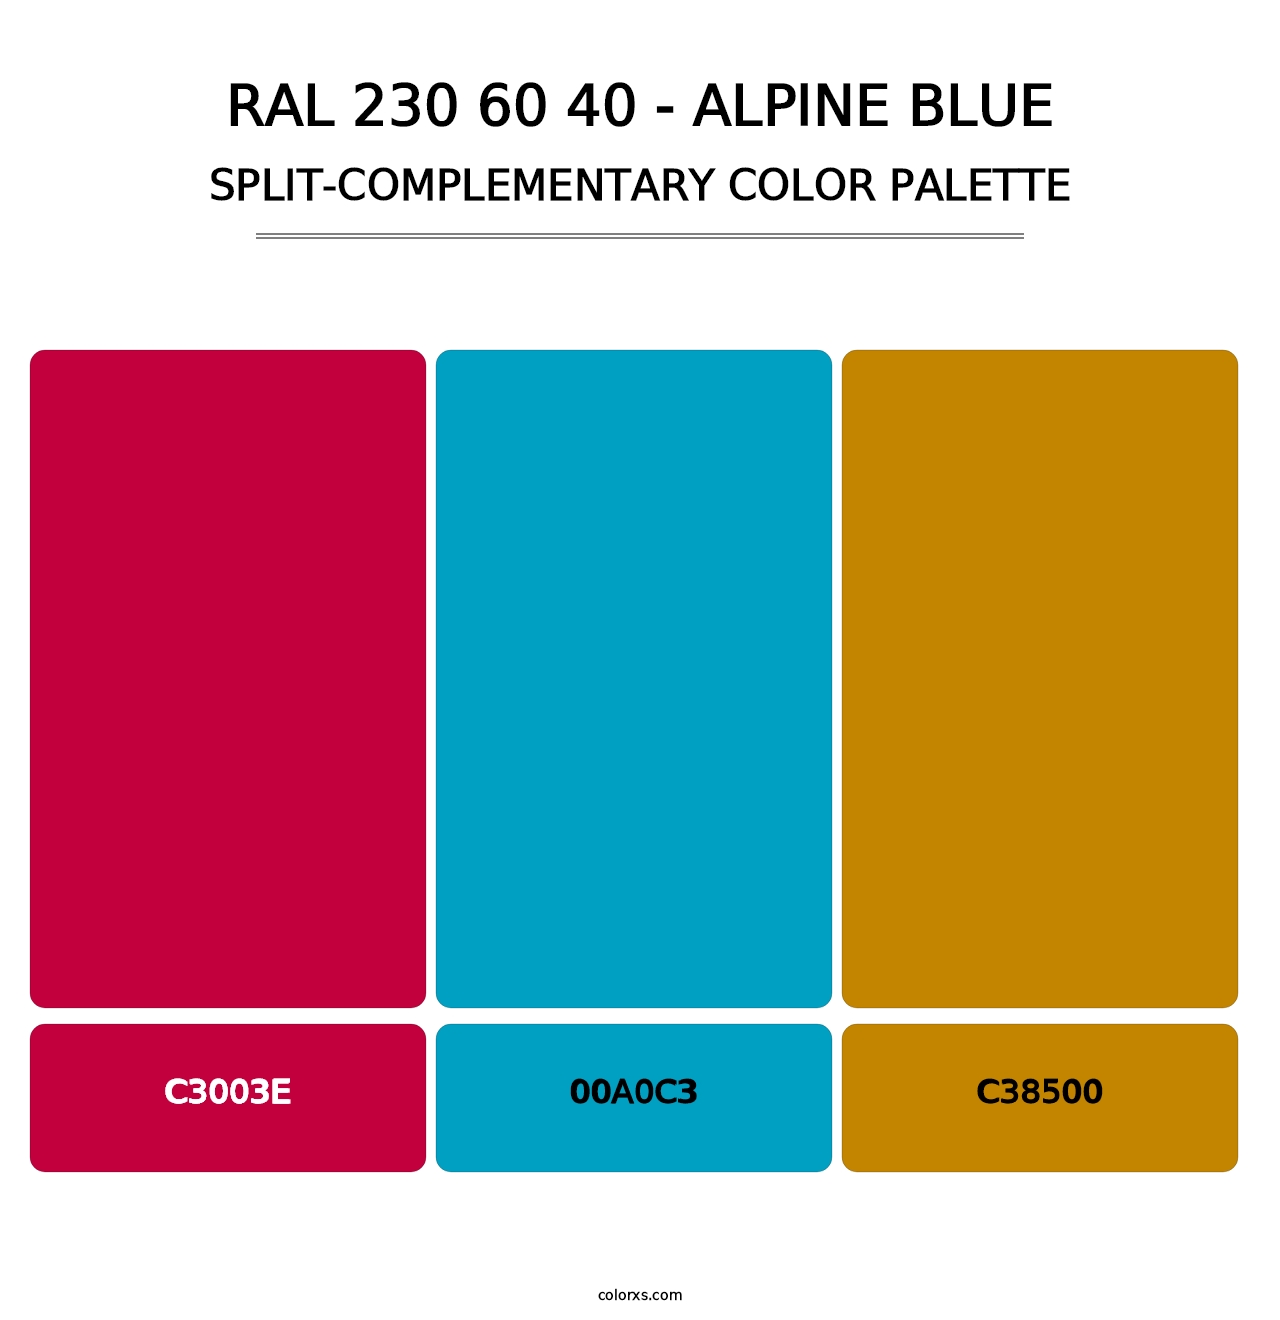 RAL 230 60 40 - Alpine Blue - Split-Complementary Color Palette